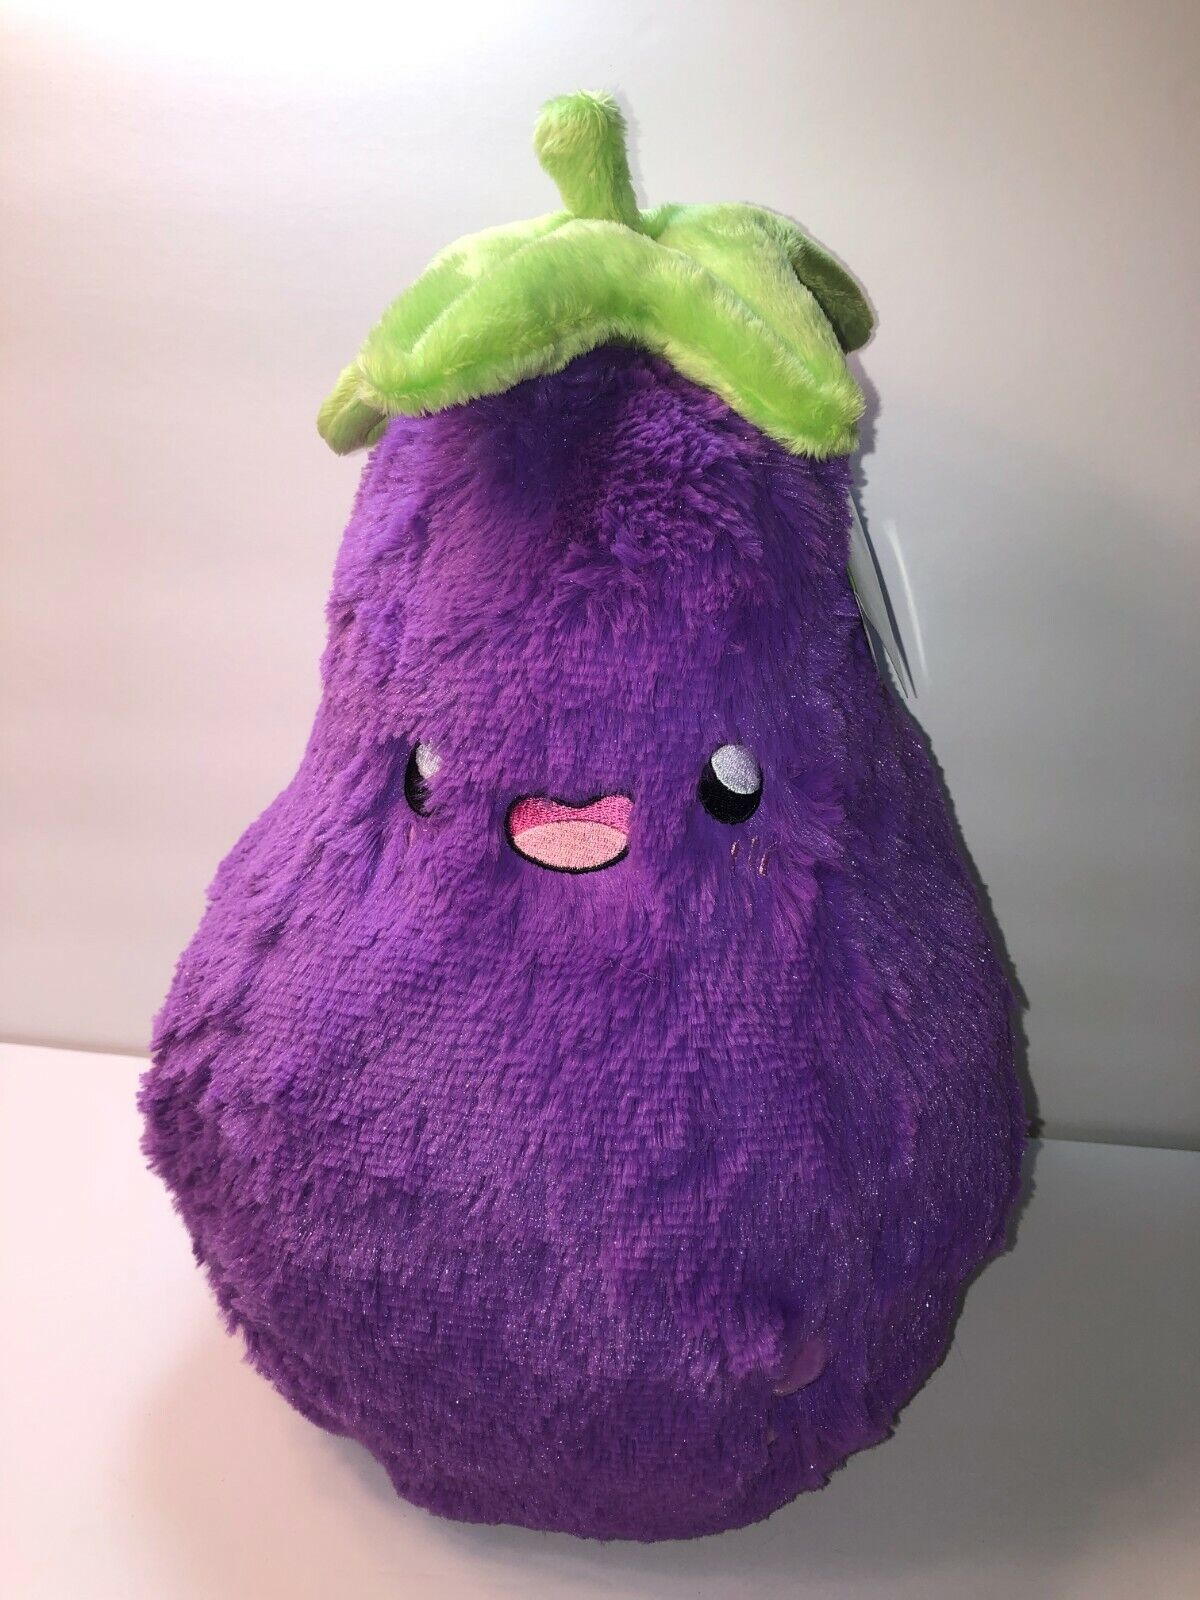 Approx New 9" tall Toy Squishable Purple Eggplant Plush .Super Soft 